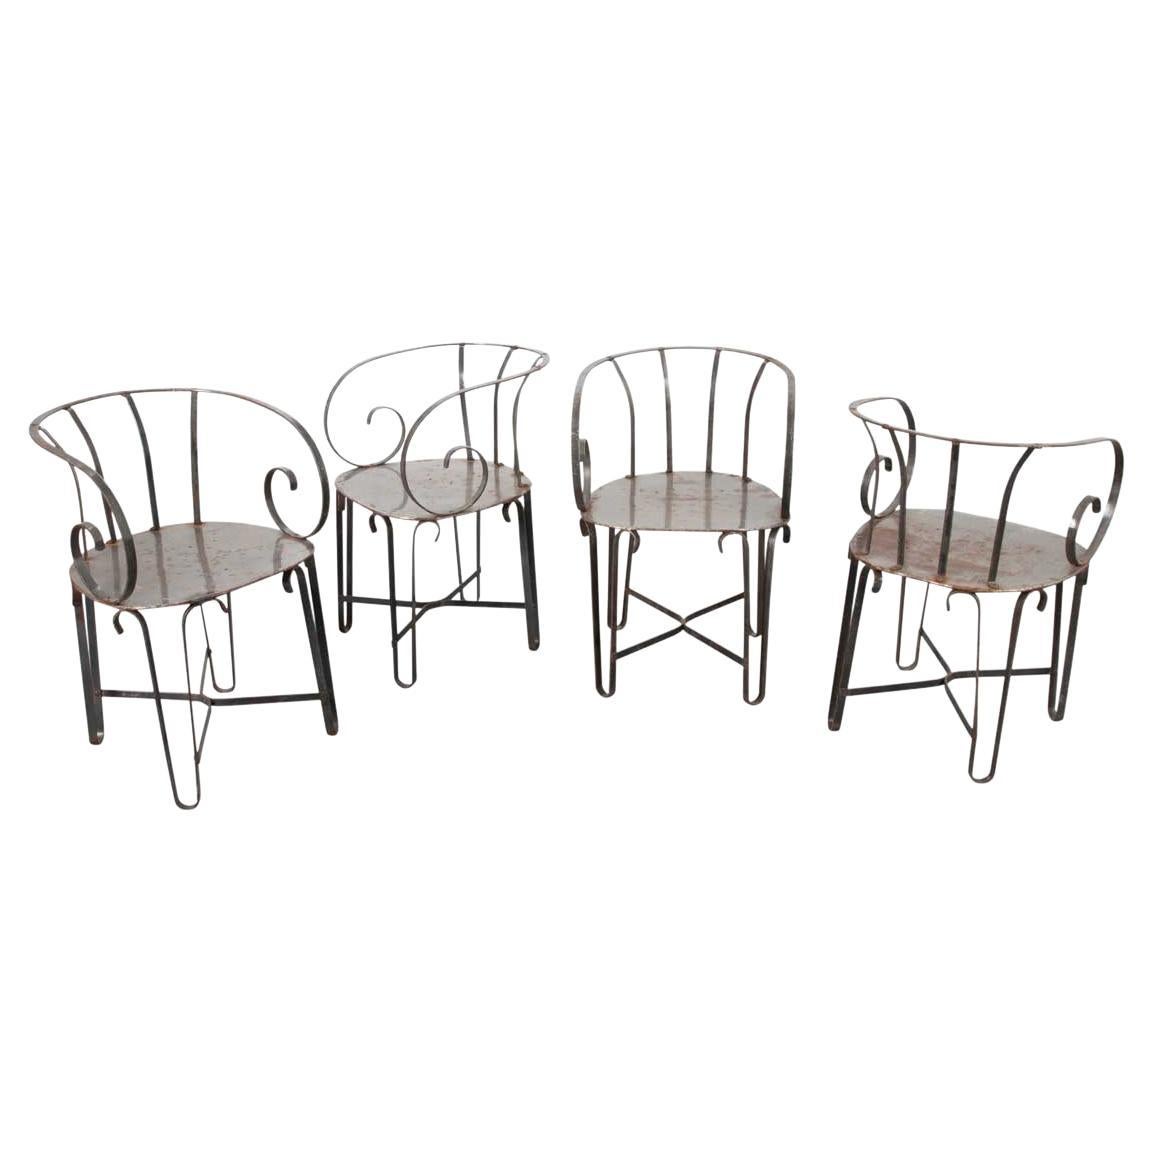 Set of 4 Vintage Scroll Arm Metal Chairs